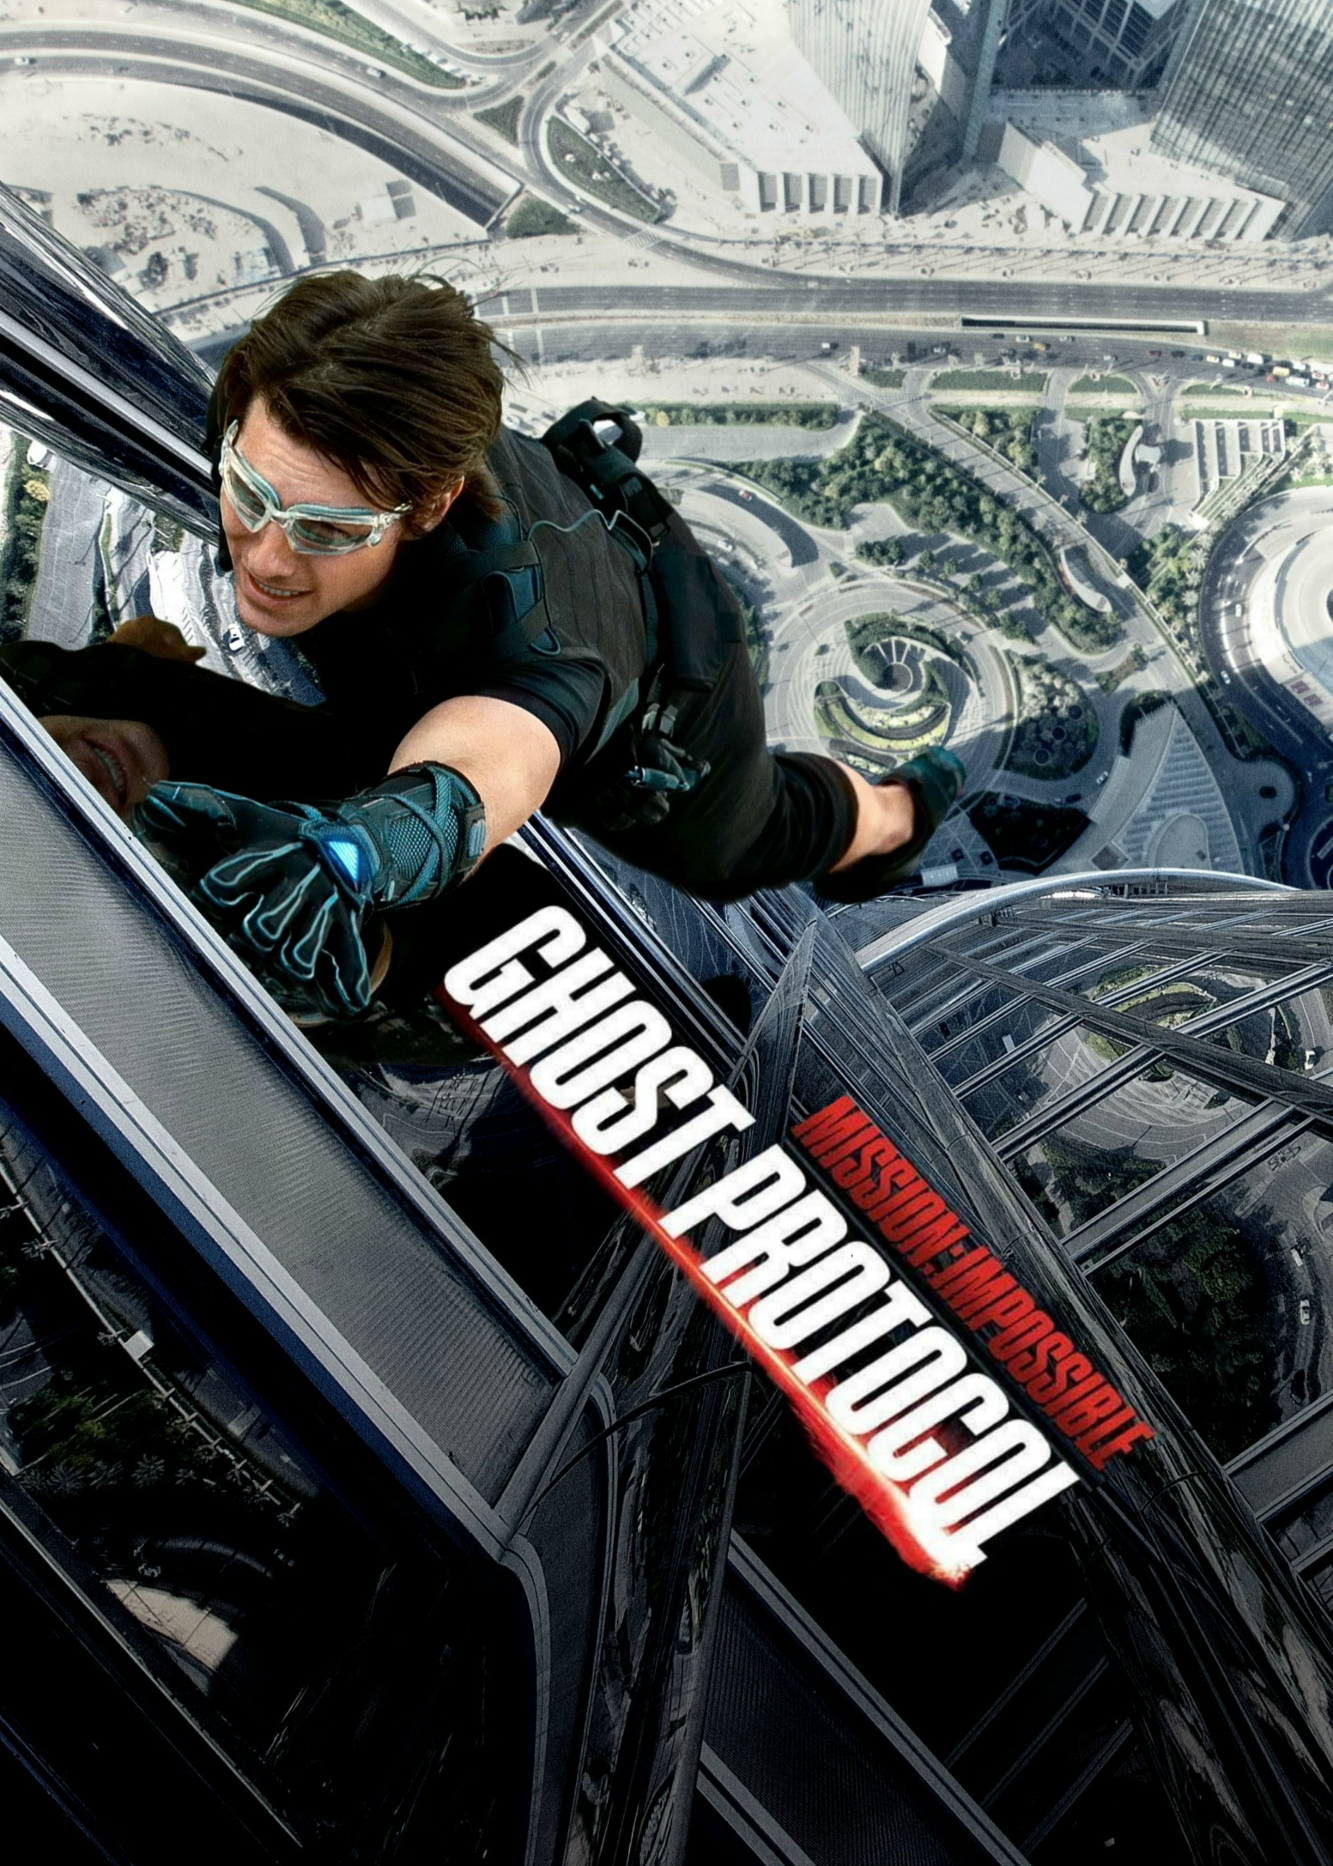 Poster Phim Nhiệm vụ bất khả thi: Chiến dịch bóng ma (Mission: Impossible - Ghost Protocol)